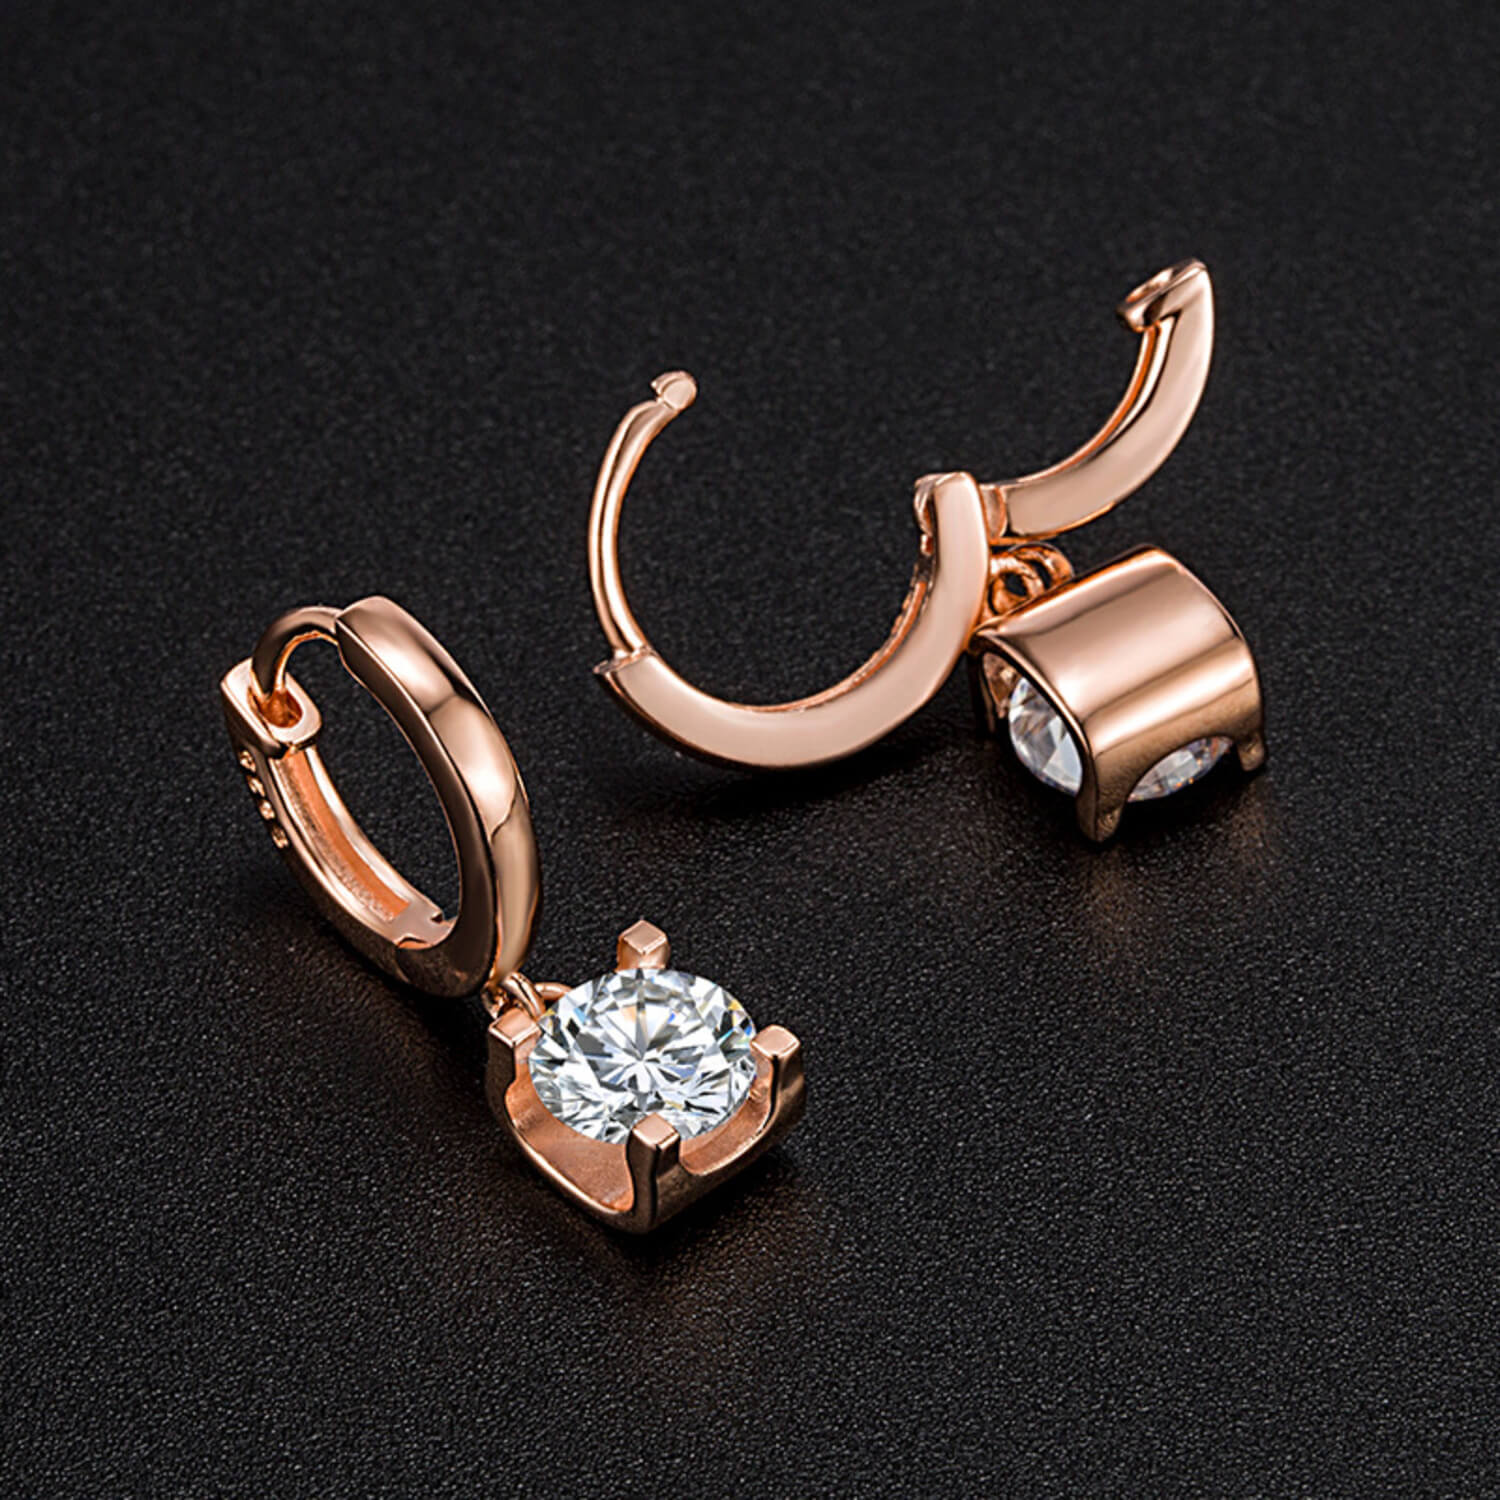 Classic Original Moissanite Earrings Women's Gemstone 14K White Gold Color 925 Silver Drop Earrings Fine Jewelry Birthday Gift